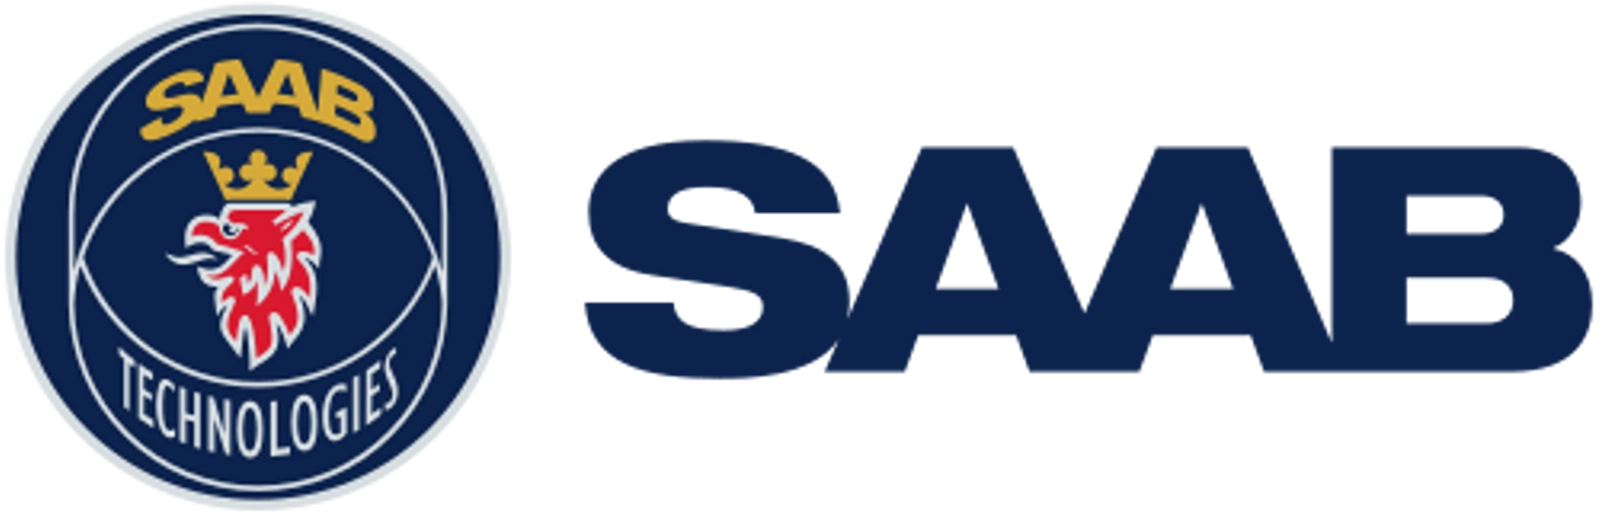 логотип Saab